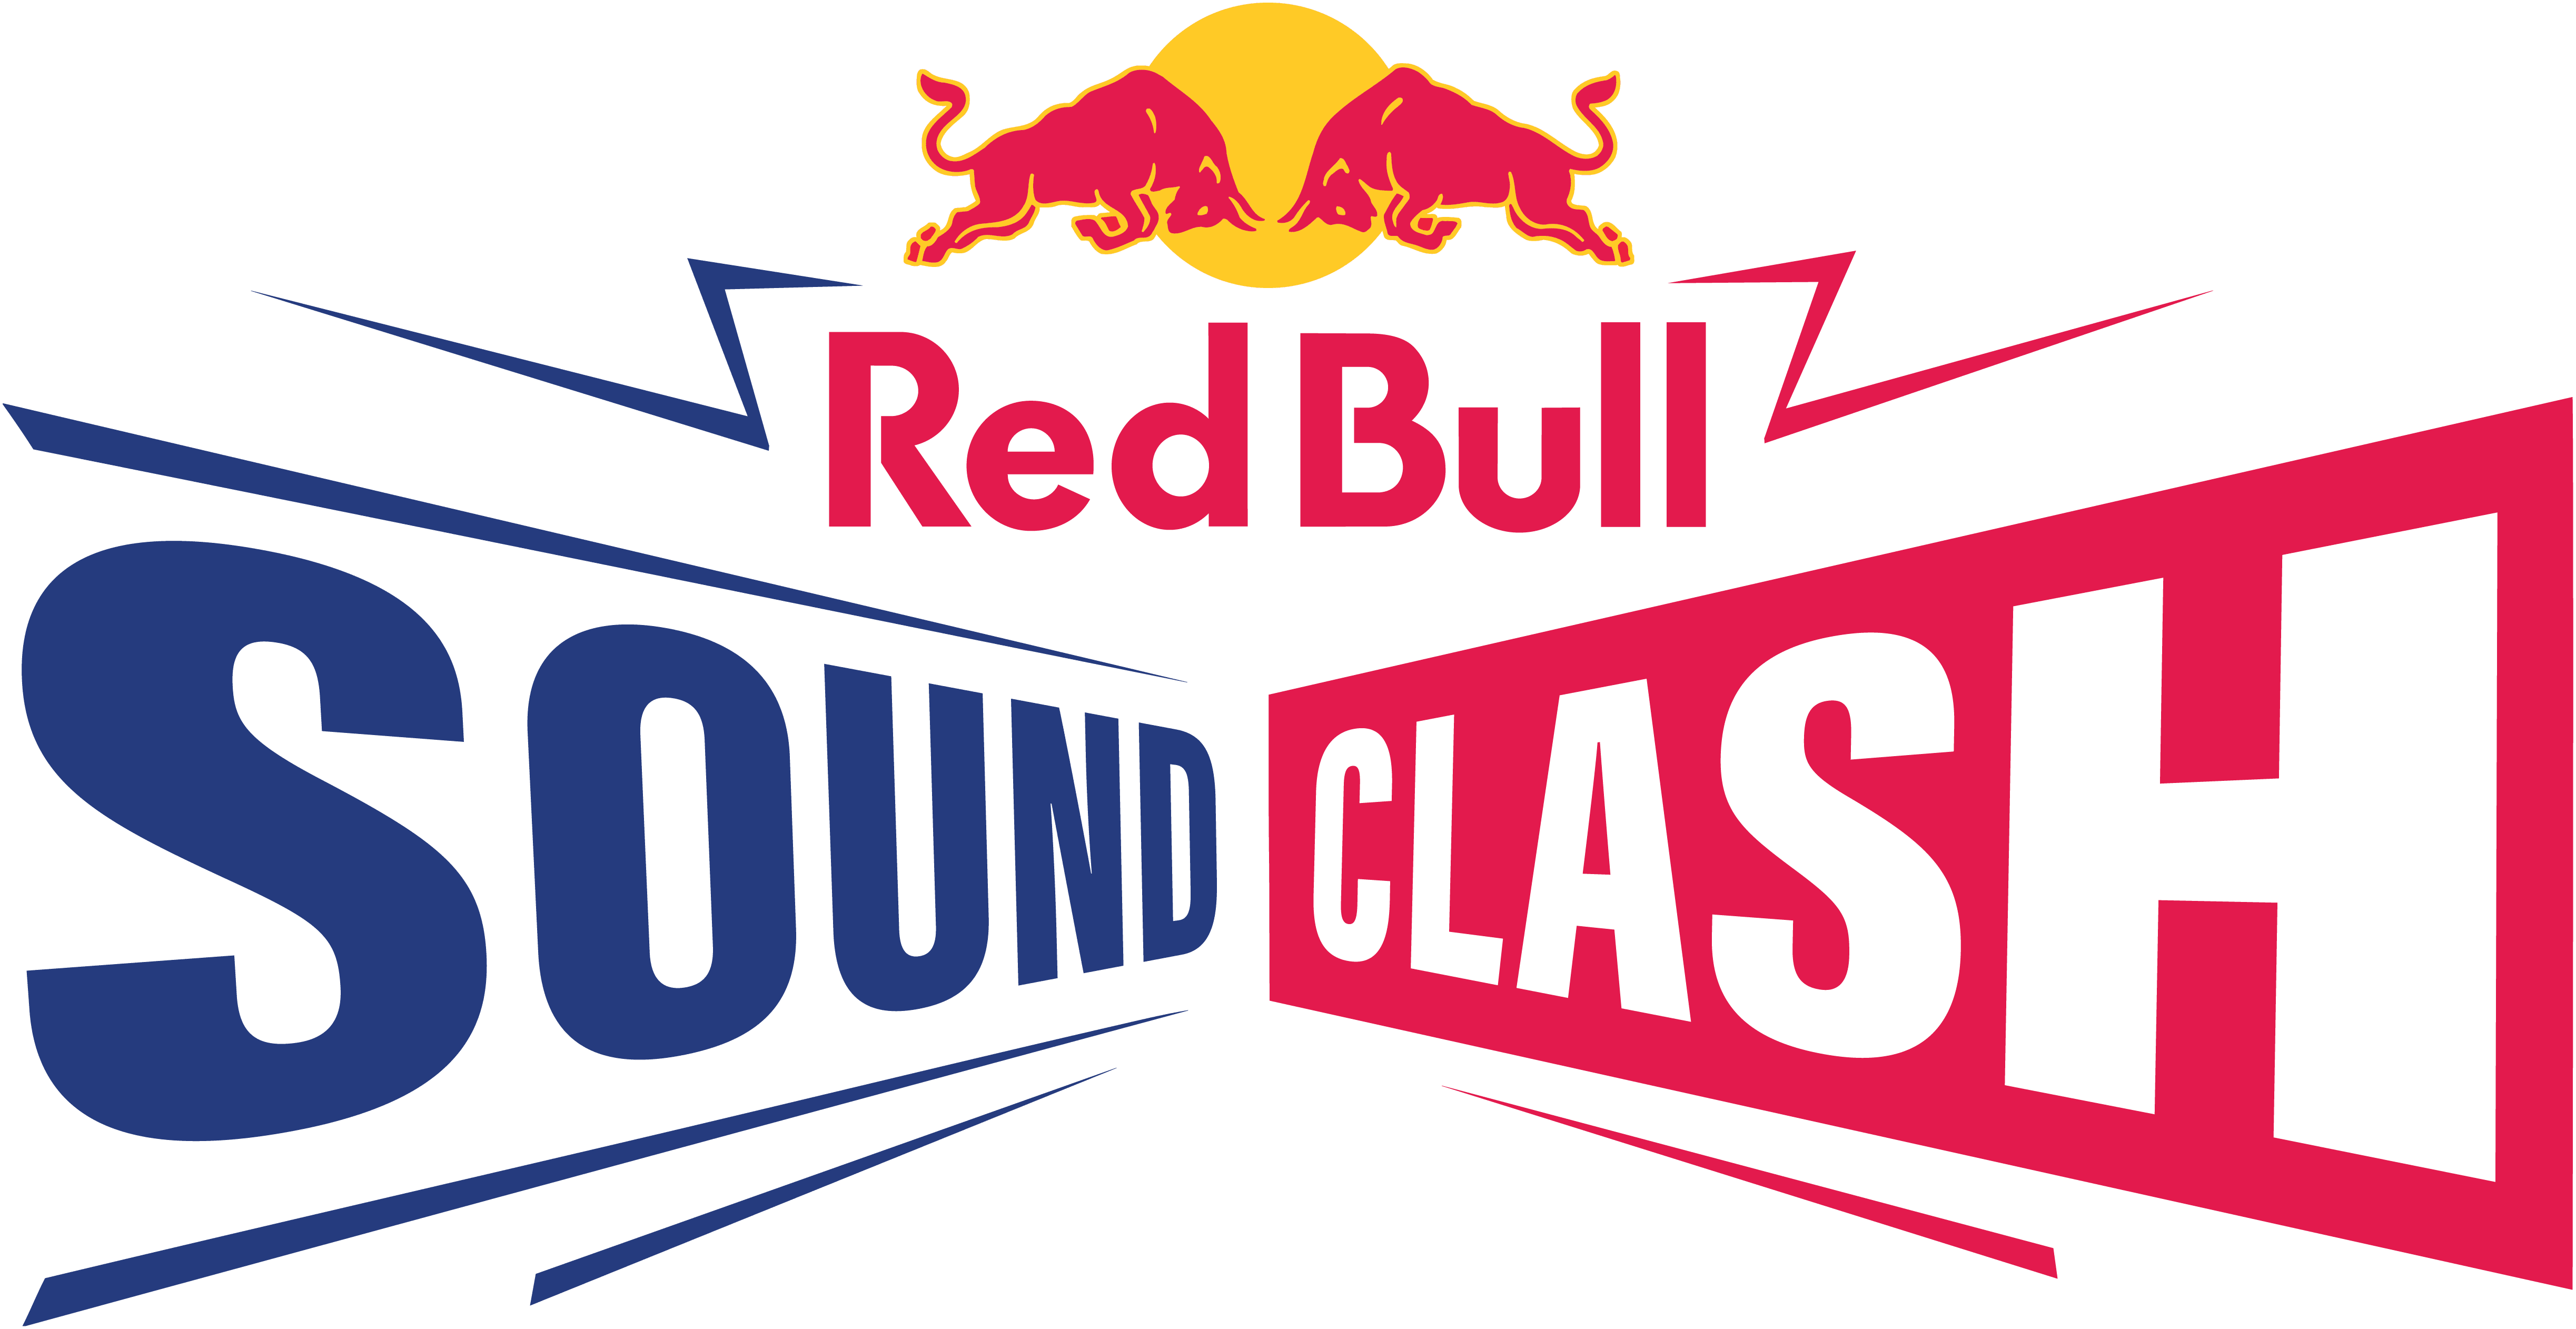 Red Bull SoundClash Bren Joy vs Jake Wesley Rogers